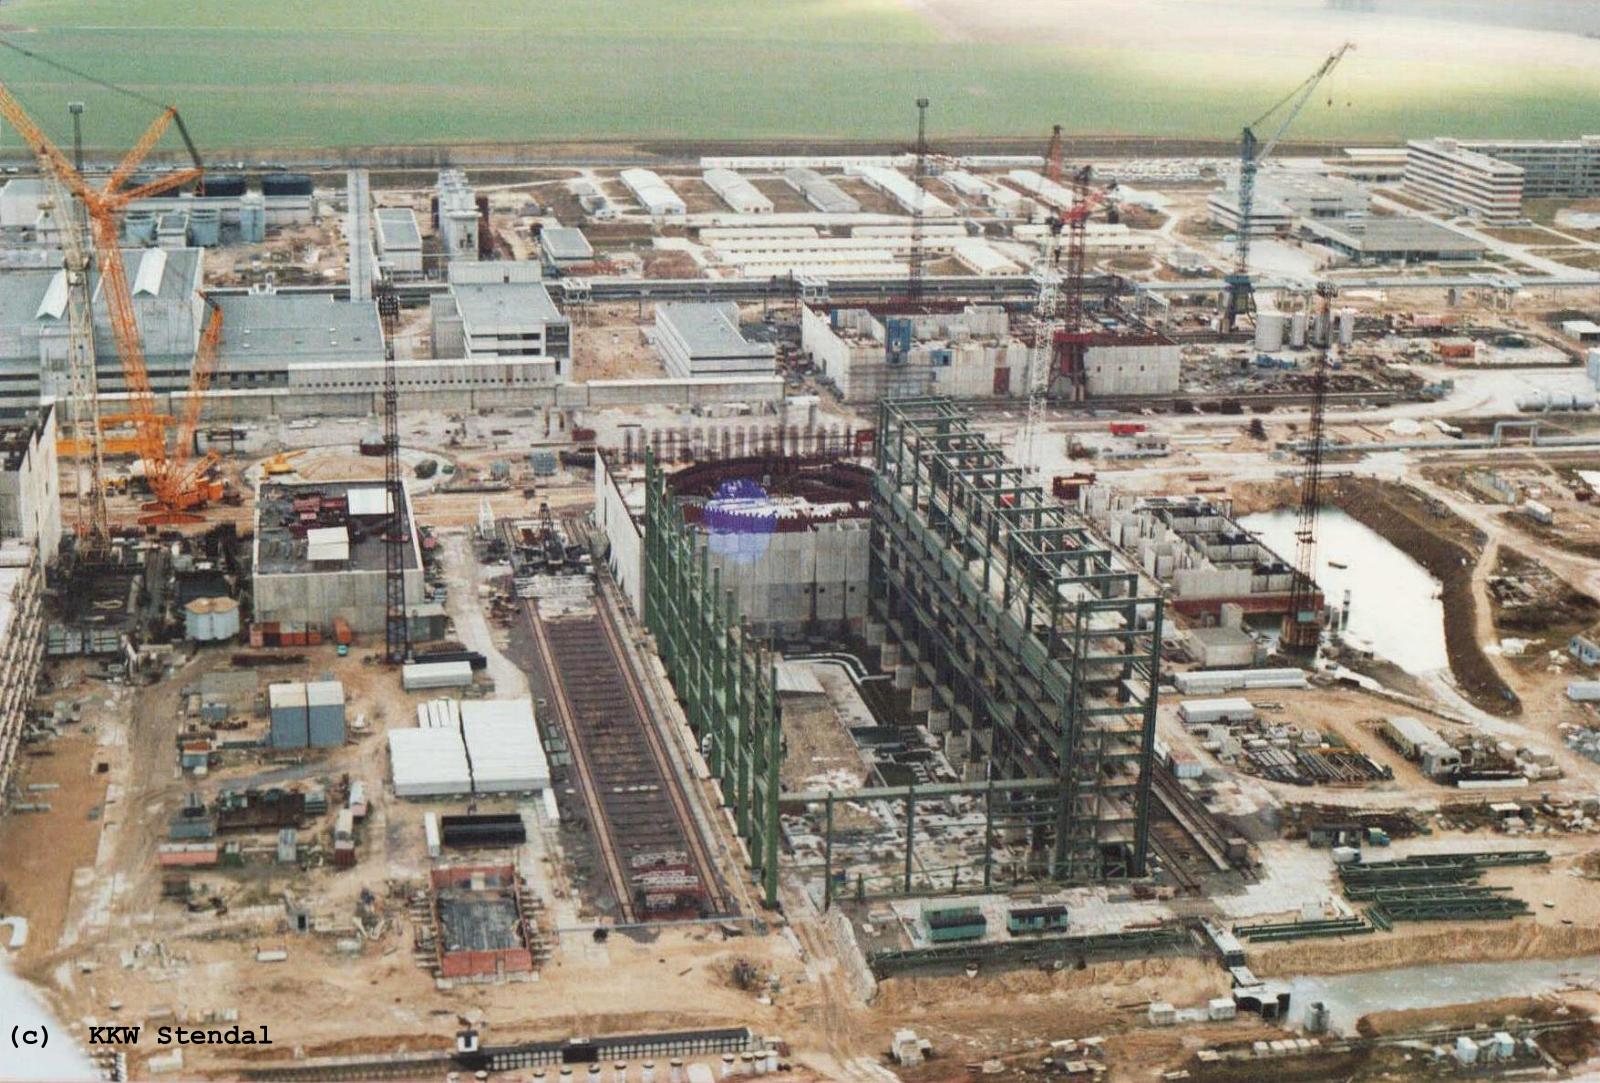  KKW Stendal, Baustelle 1990, Mitte: Reaktor B, Maschinenhaus, dahinter
 Reaktorgebäude B 